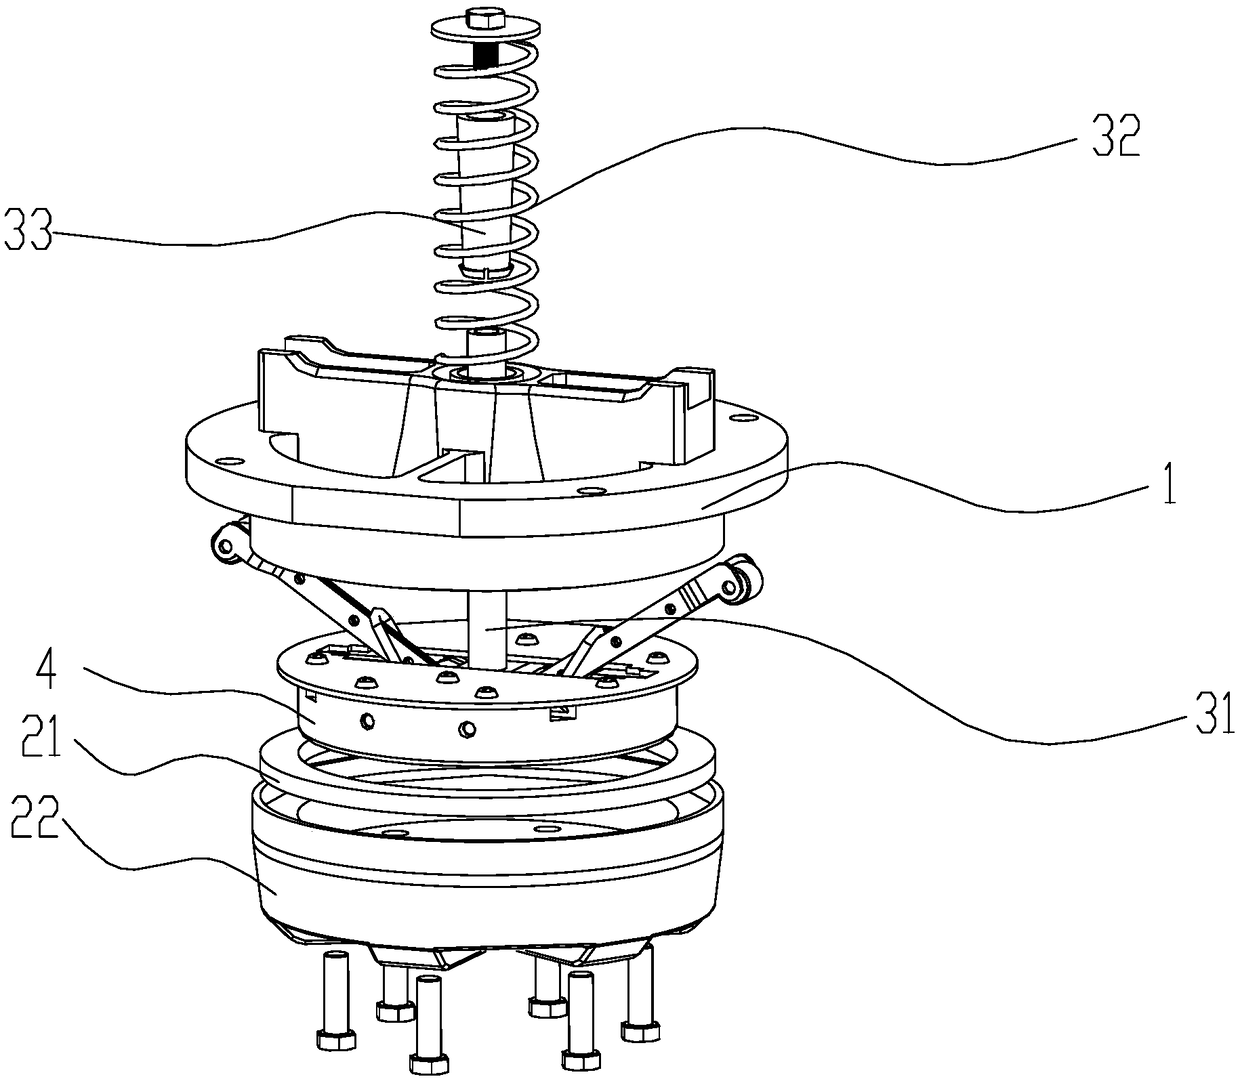 Low-resistance check valve